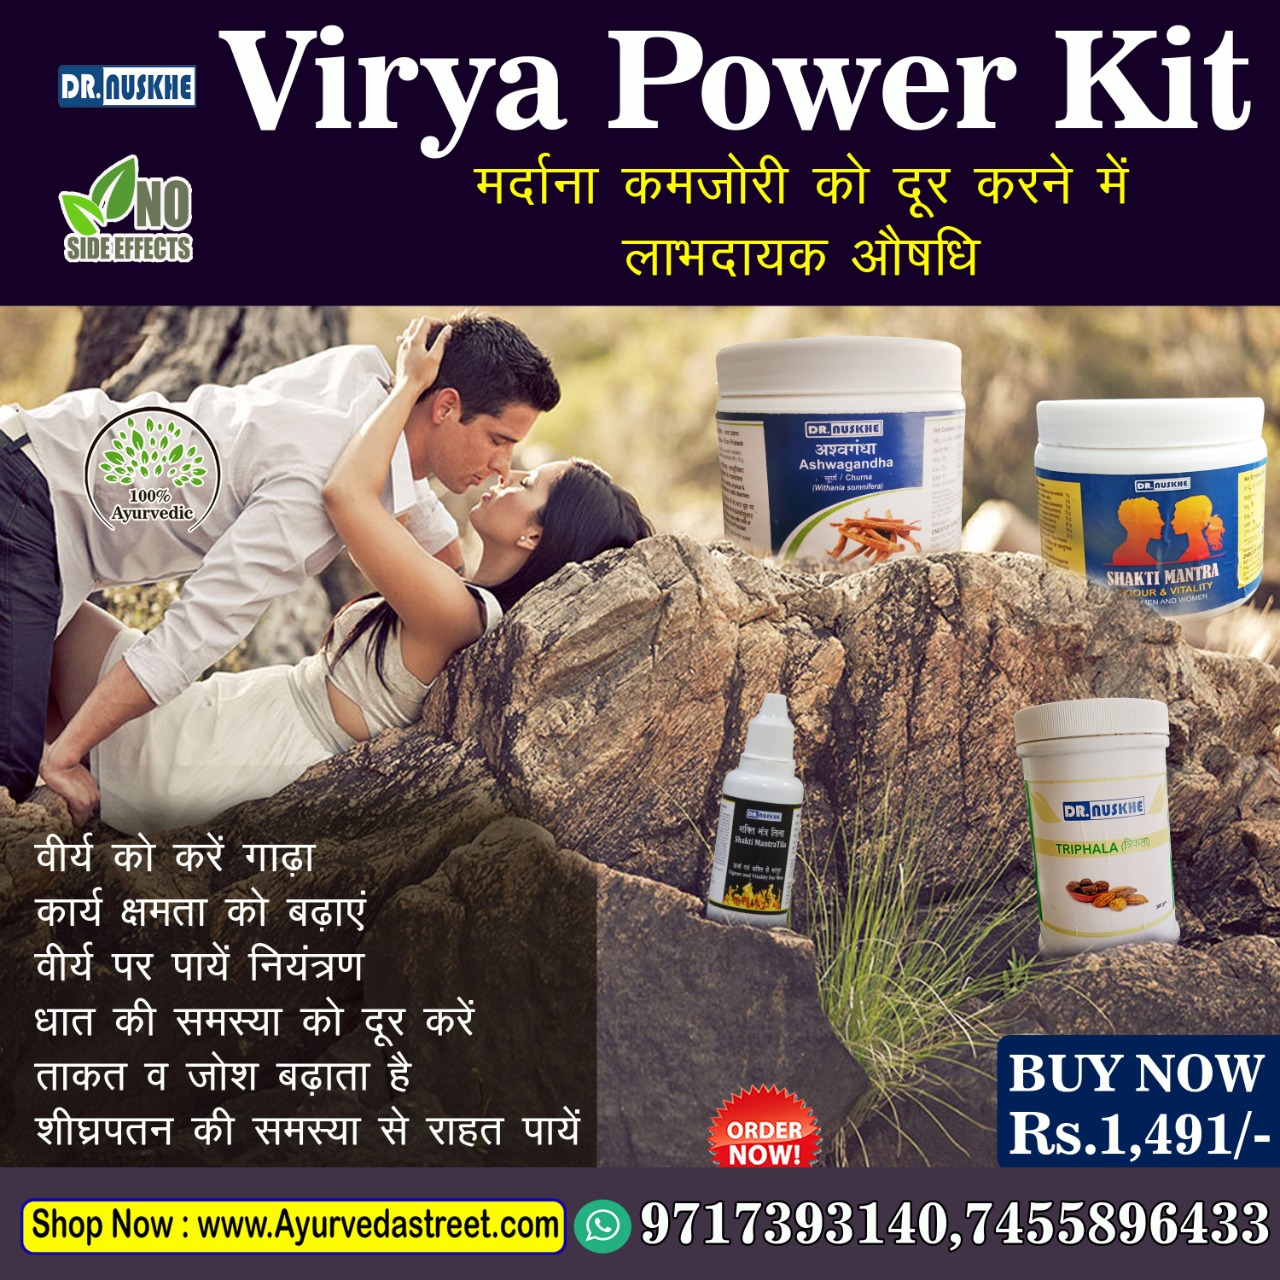 1597056992-virya-power-kit.jpg